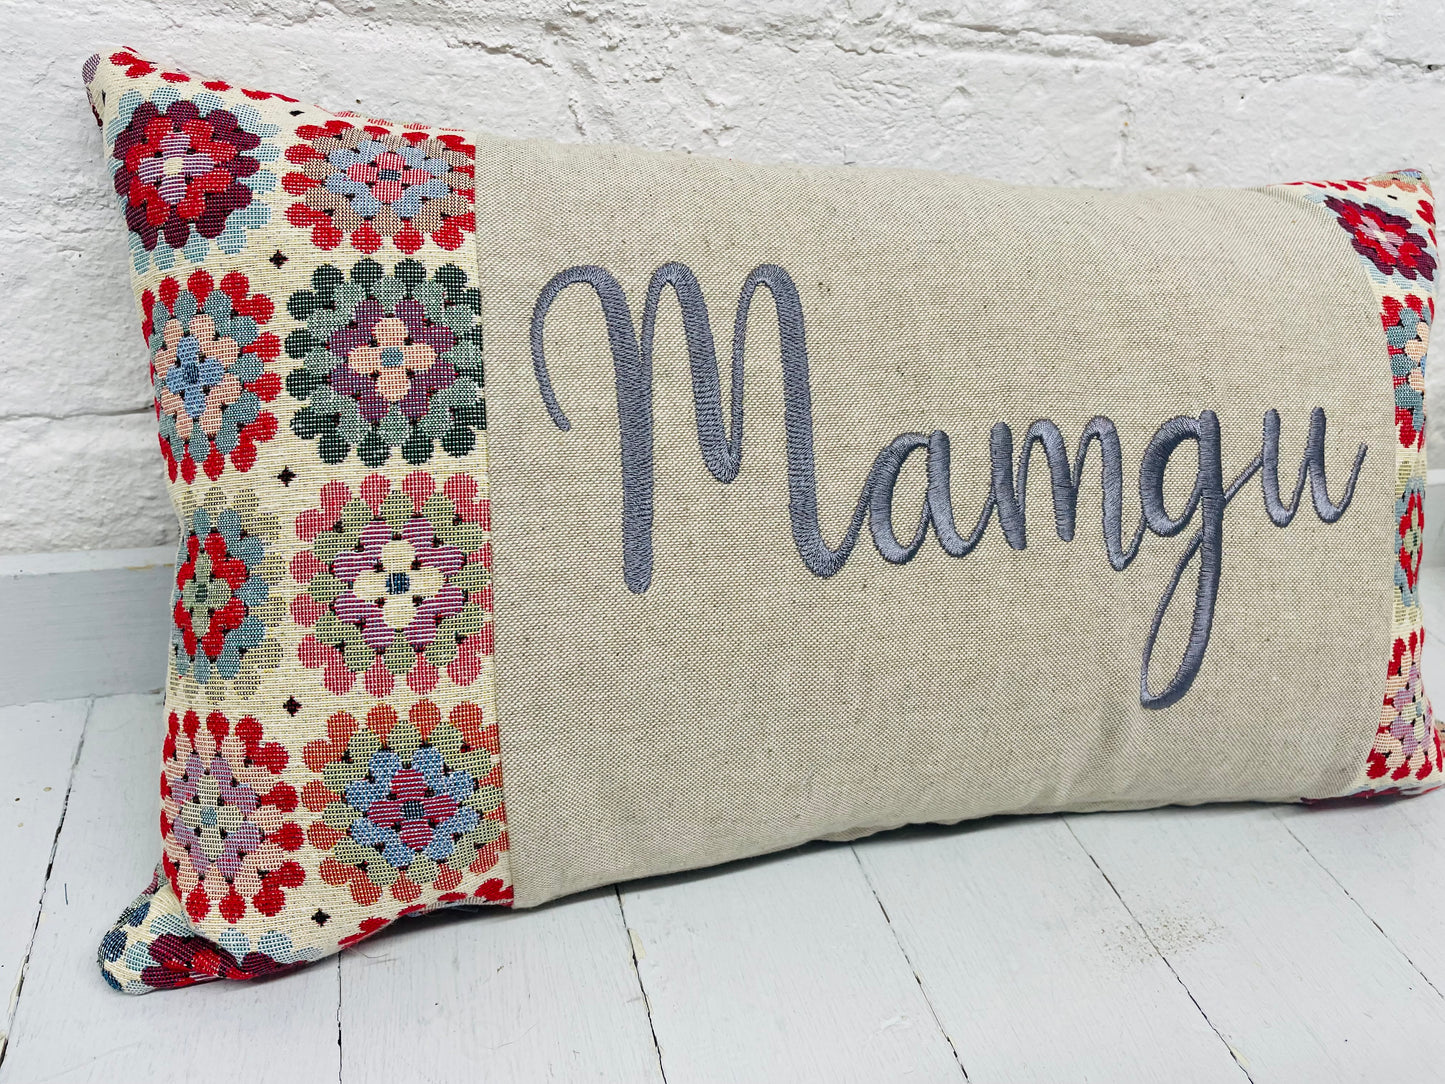 Mamgu long panel cushion- Crochet  style fabric